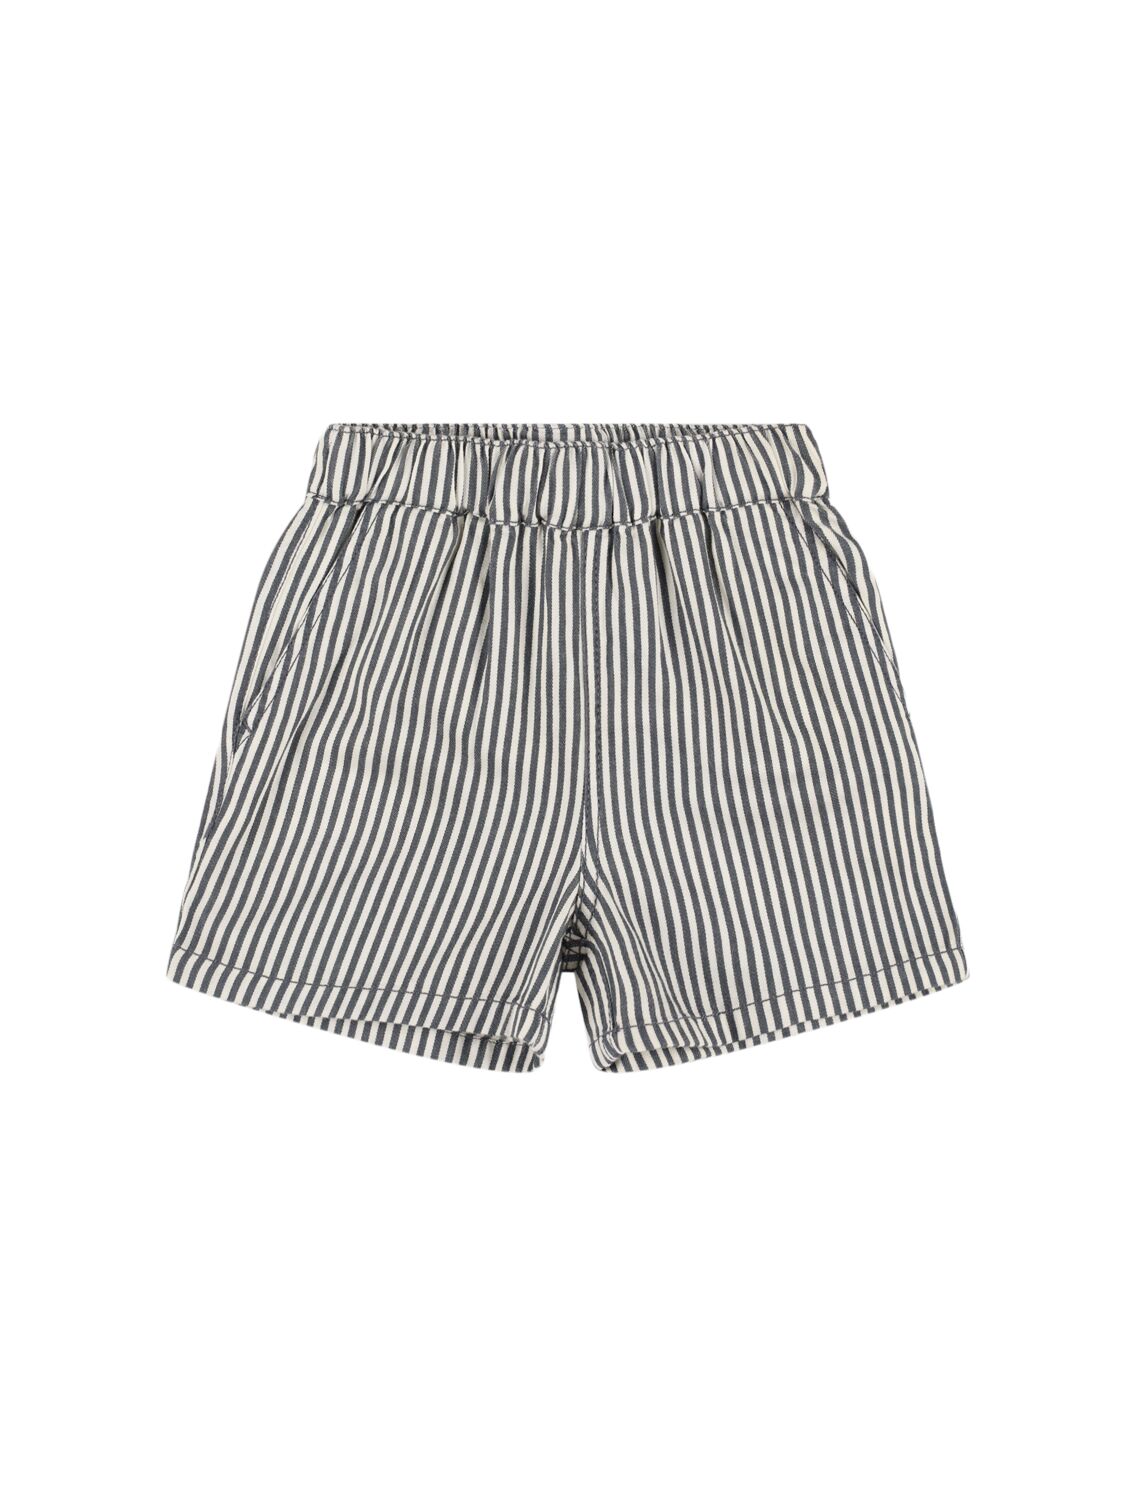 Liewood Kids' Striped Organic Cotton Shorts In Navy,white